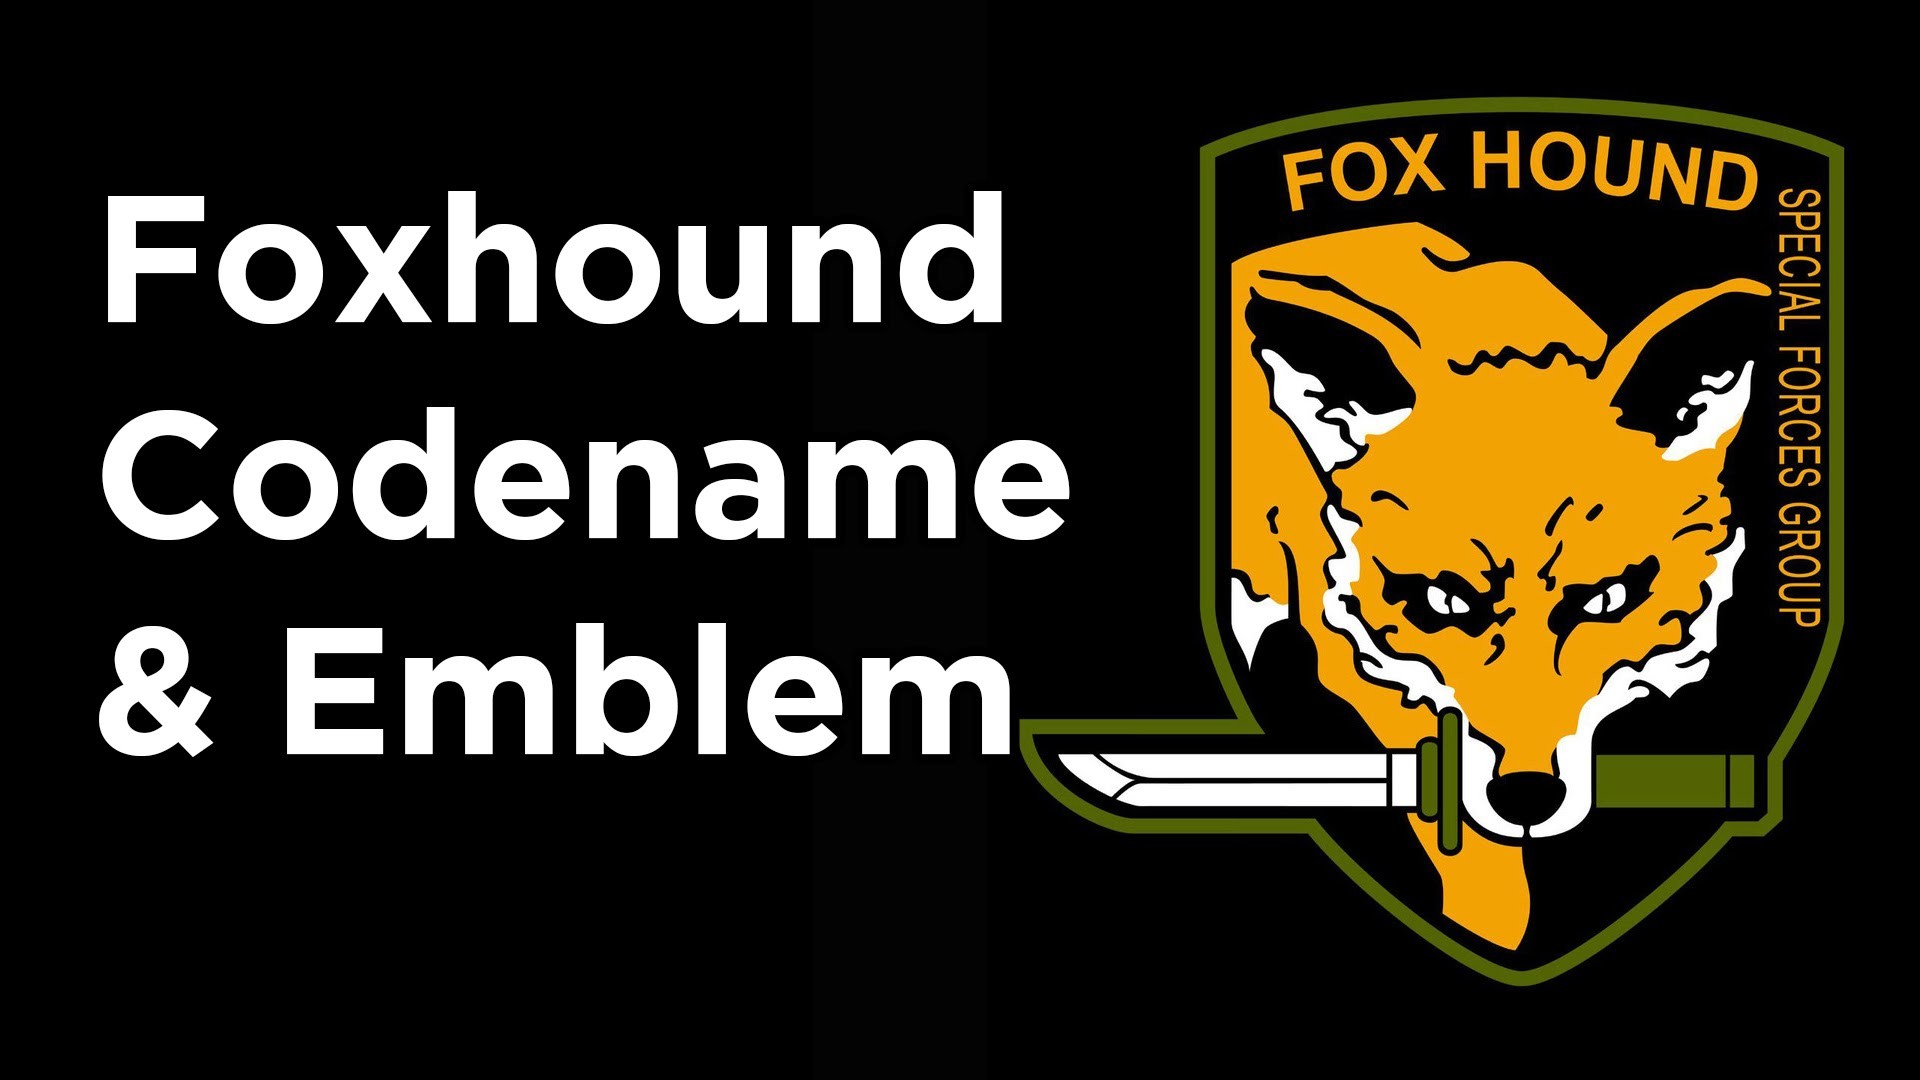 1920x1080 Metal Gear Solid V - Getting Foxhound Codename & Emblem easy way - YouTube